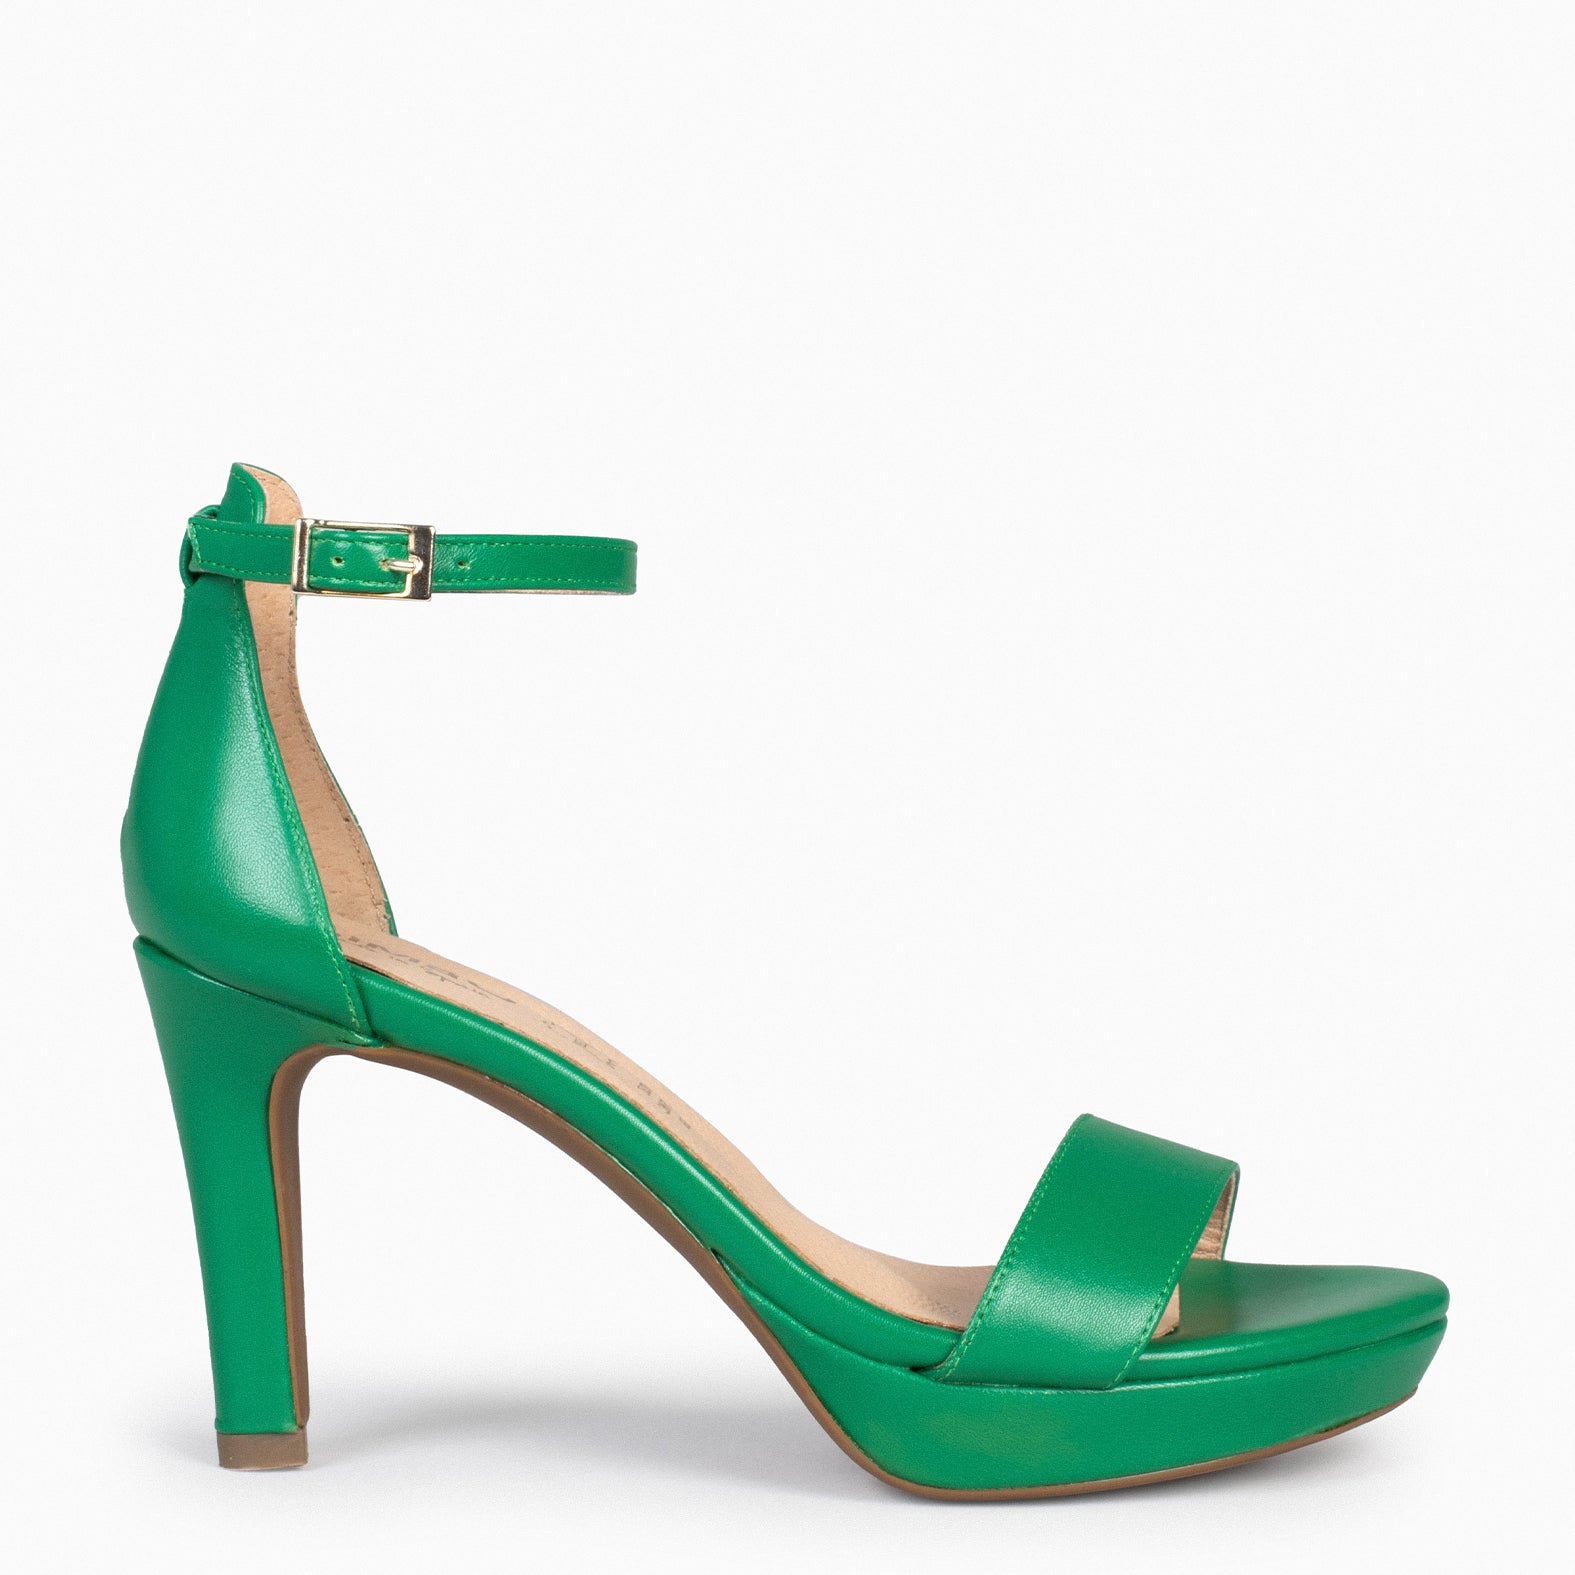 ASOS DESIGN Porto pointed high heeled pumps in emerald green | ASOS